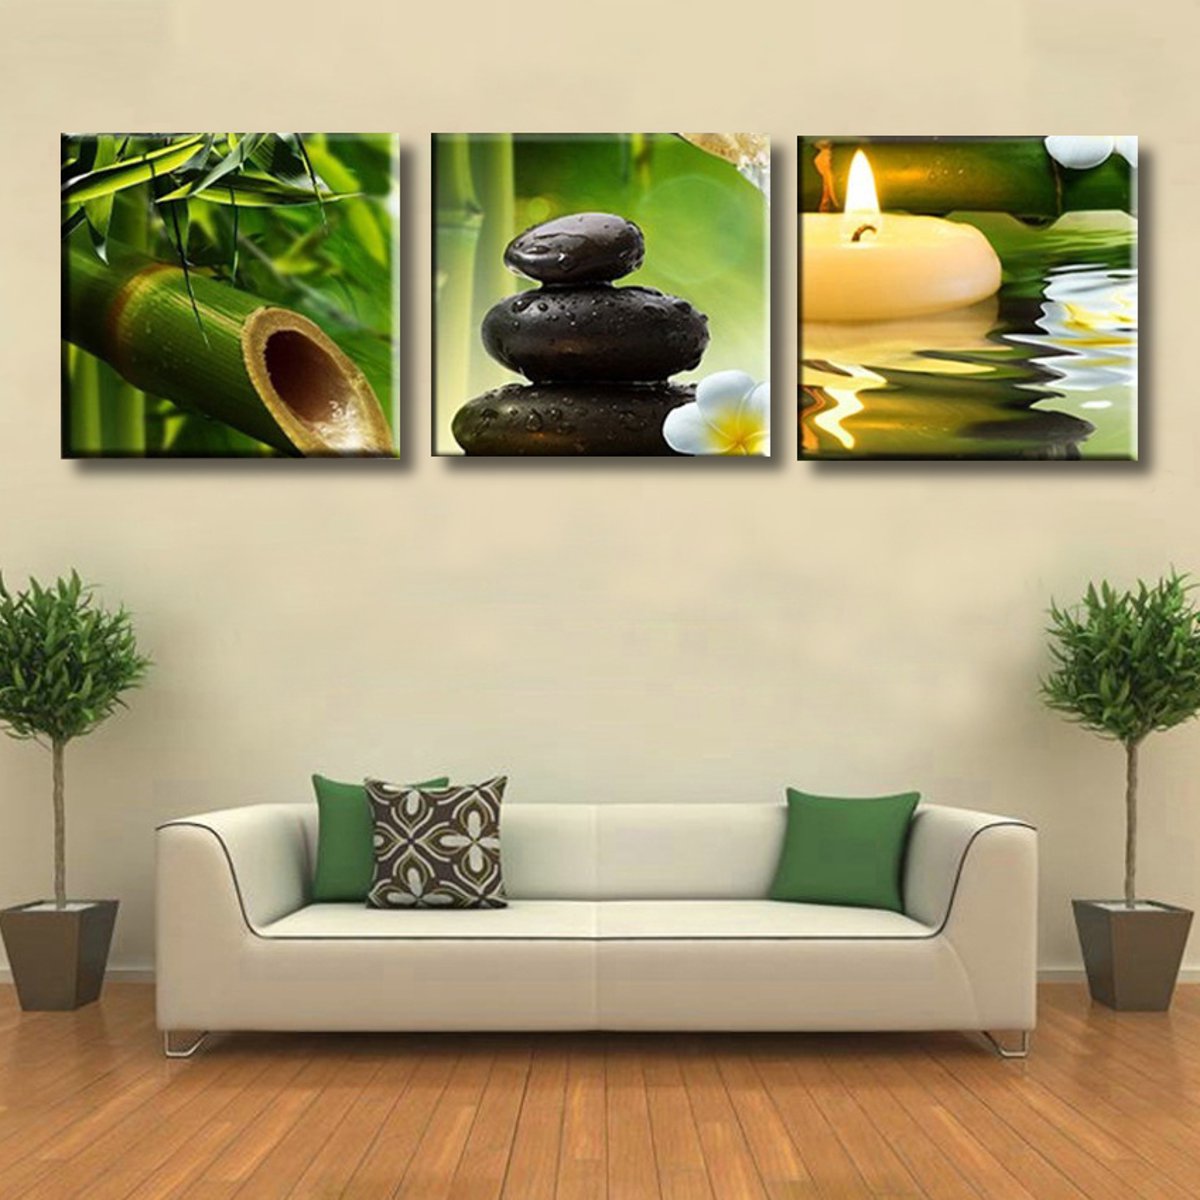 3Pcs-Canvas-Print-Paintings-Wall-Decorative-Print-Art-Pictures-FramedFrameless-Wall-Hanging-Decorati-1158553-5